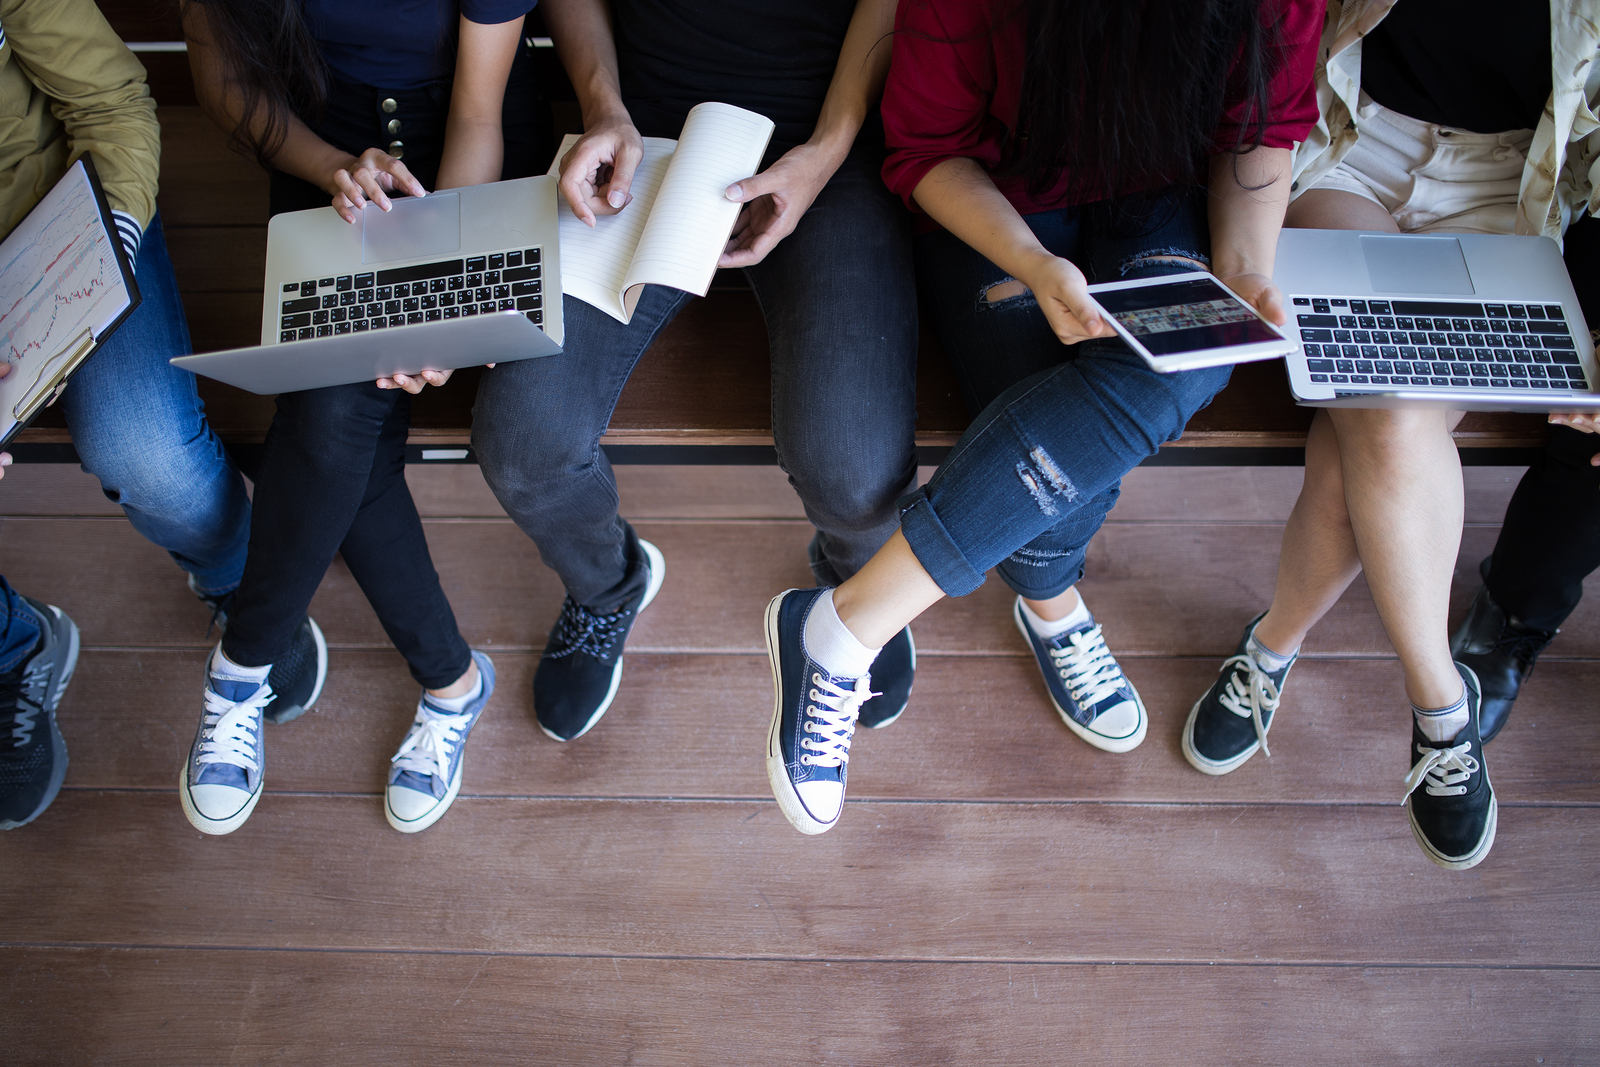 Students sharing laptops-legs